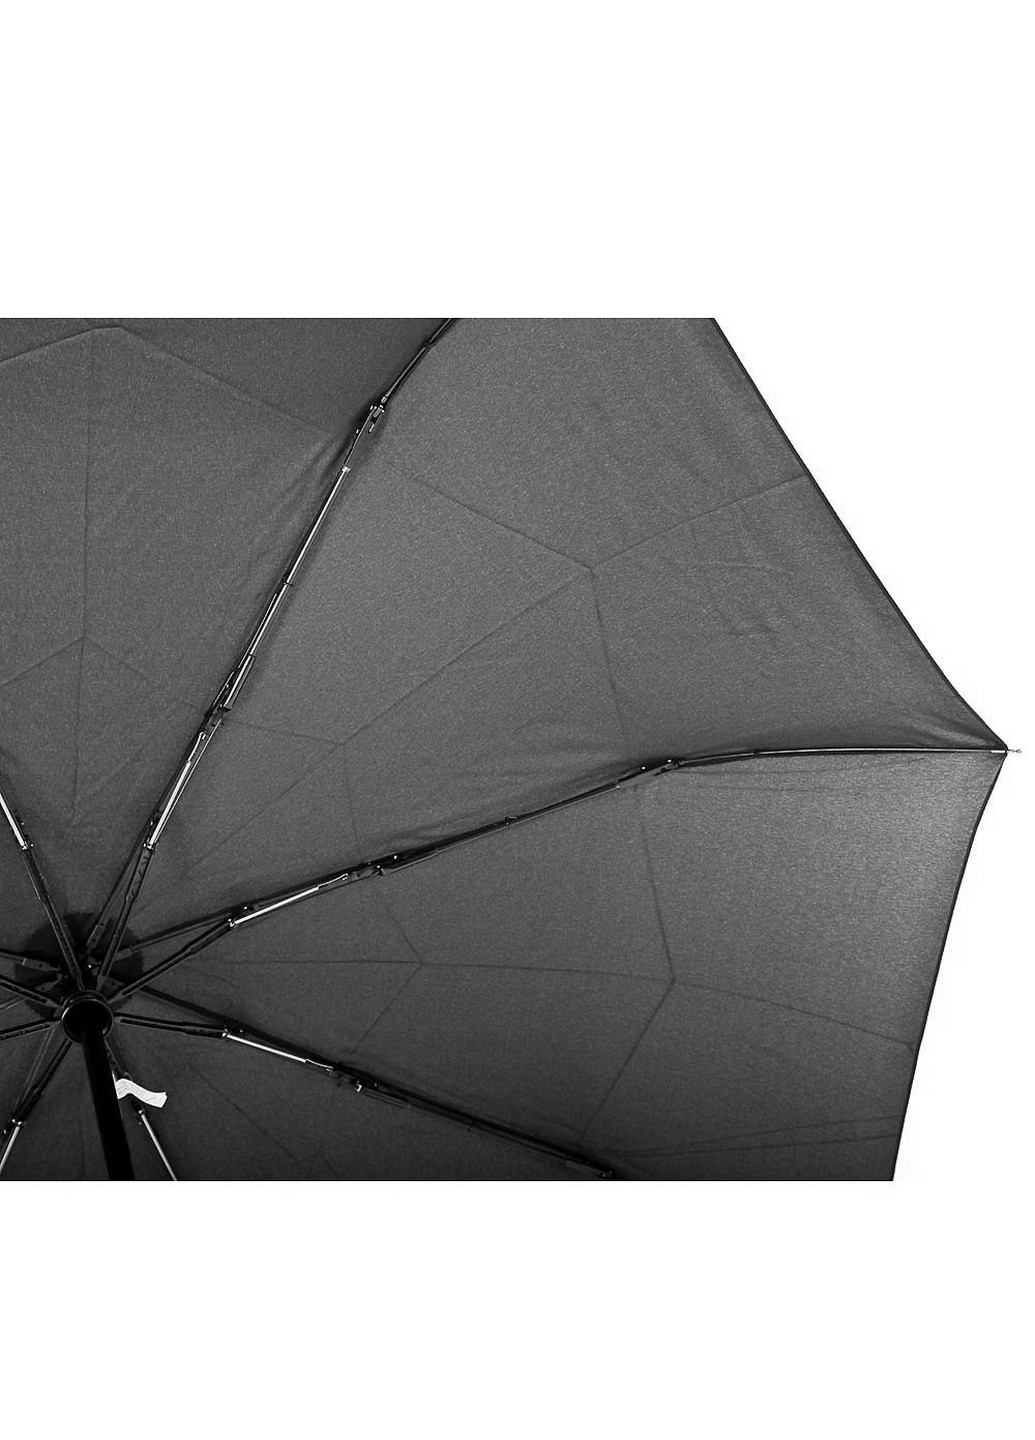 Мужской складной зонт автомат 105 см FARE (260330363)